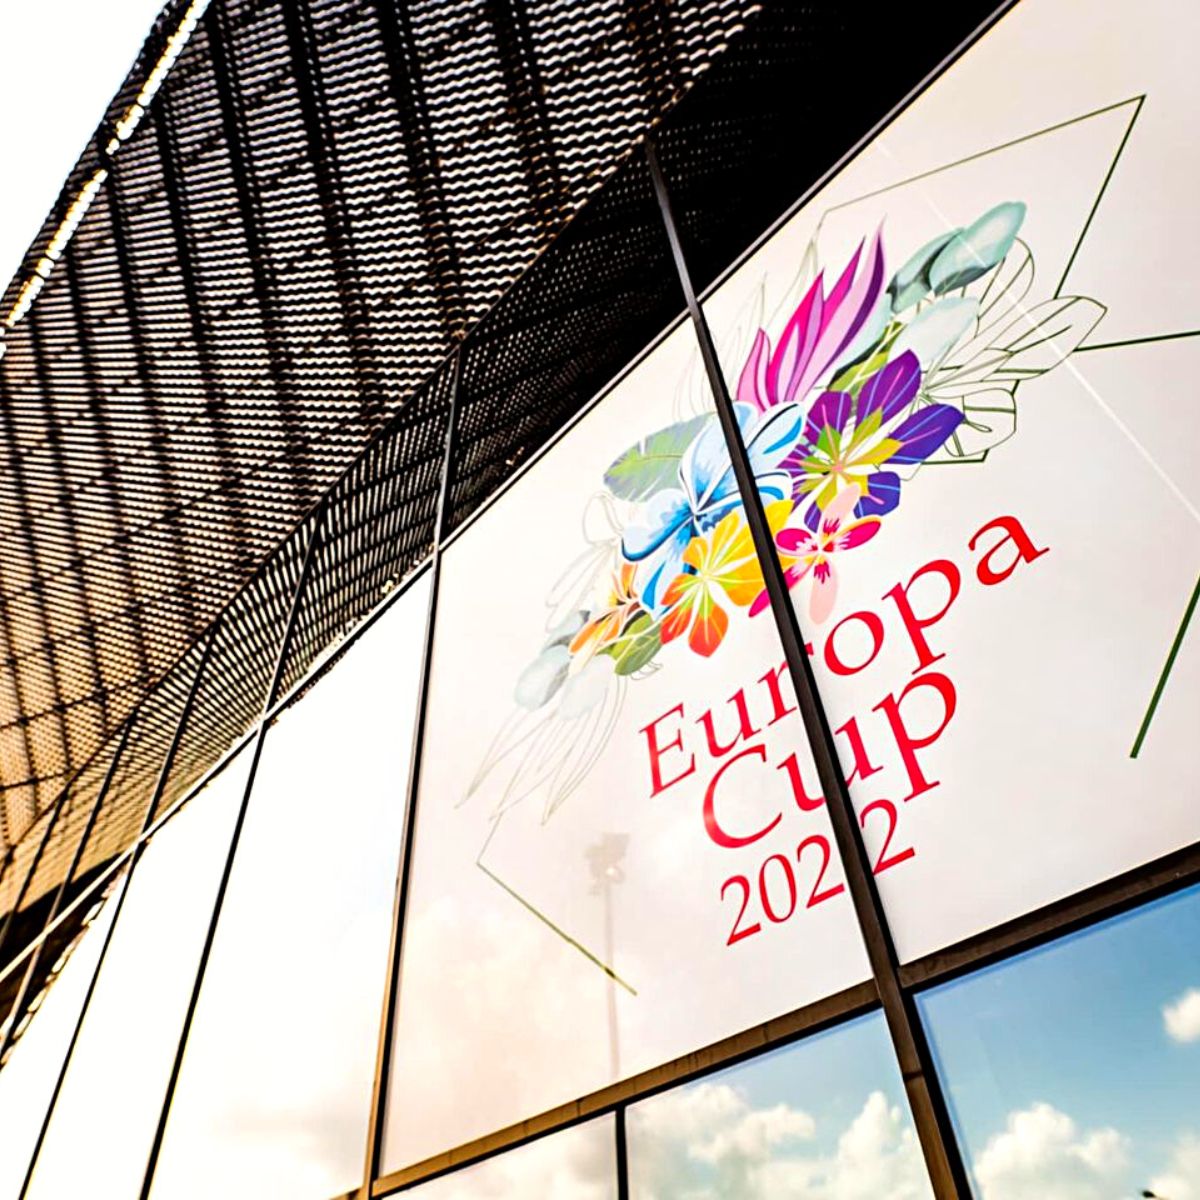 Venue Europa Cup 2022 in Poland on Thursd